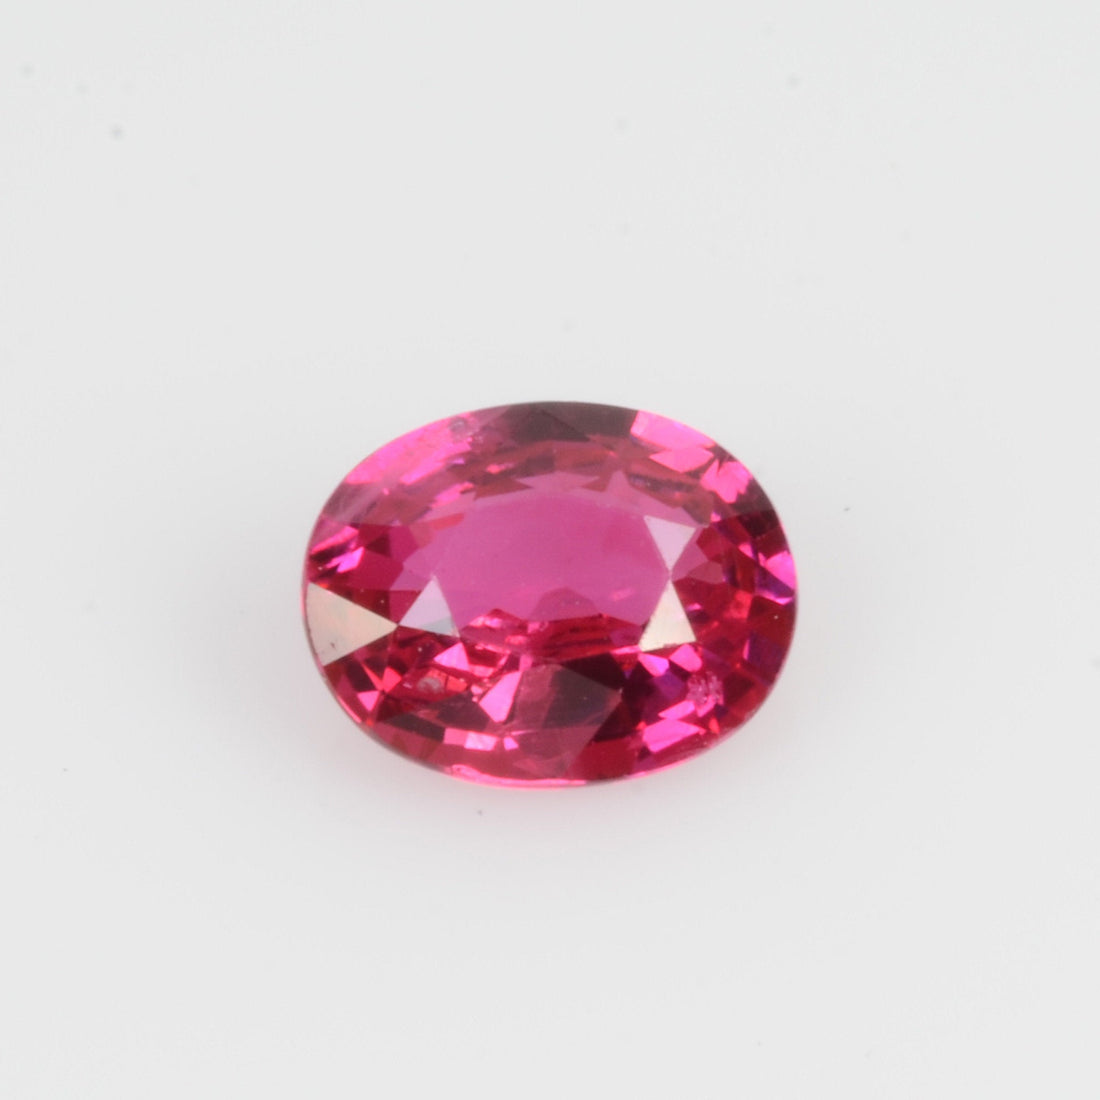 0.56 Cts Natural Ruby Loose Gemstone Oval Cut - Thai Gems Export Ltd.